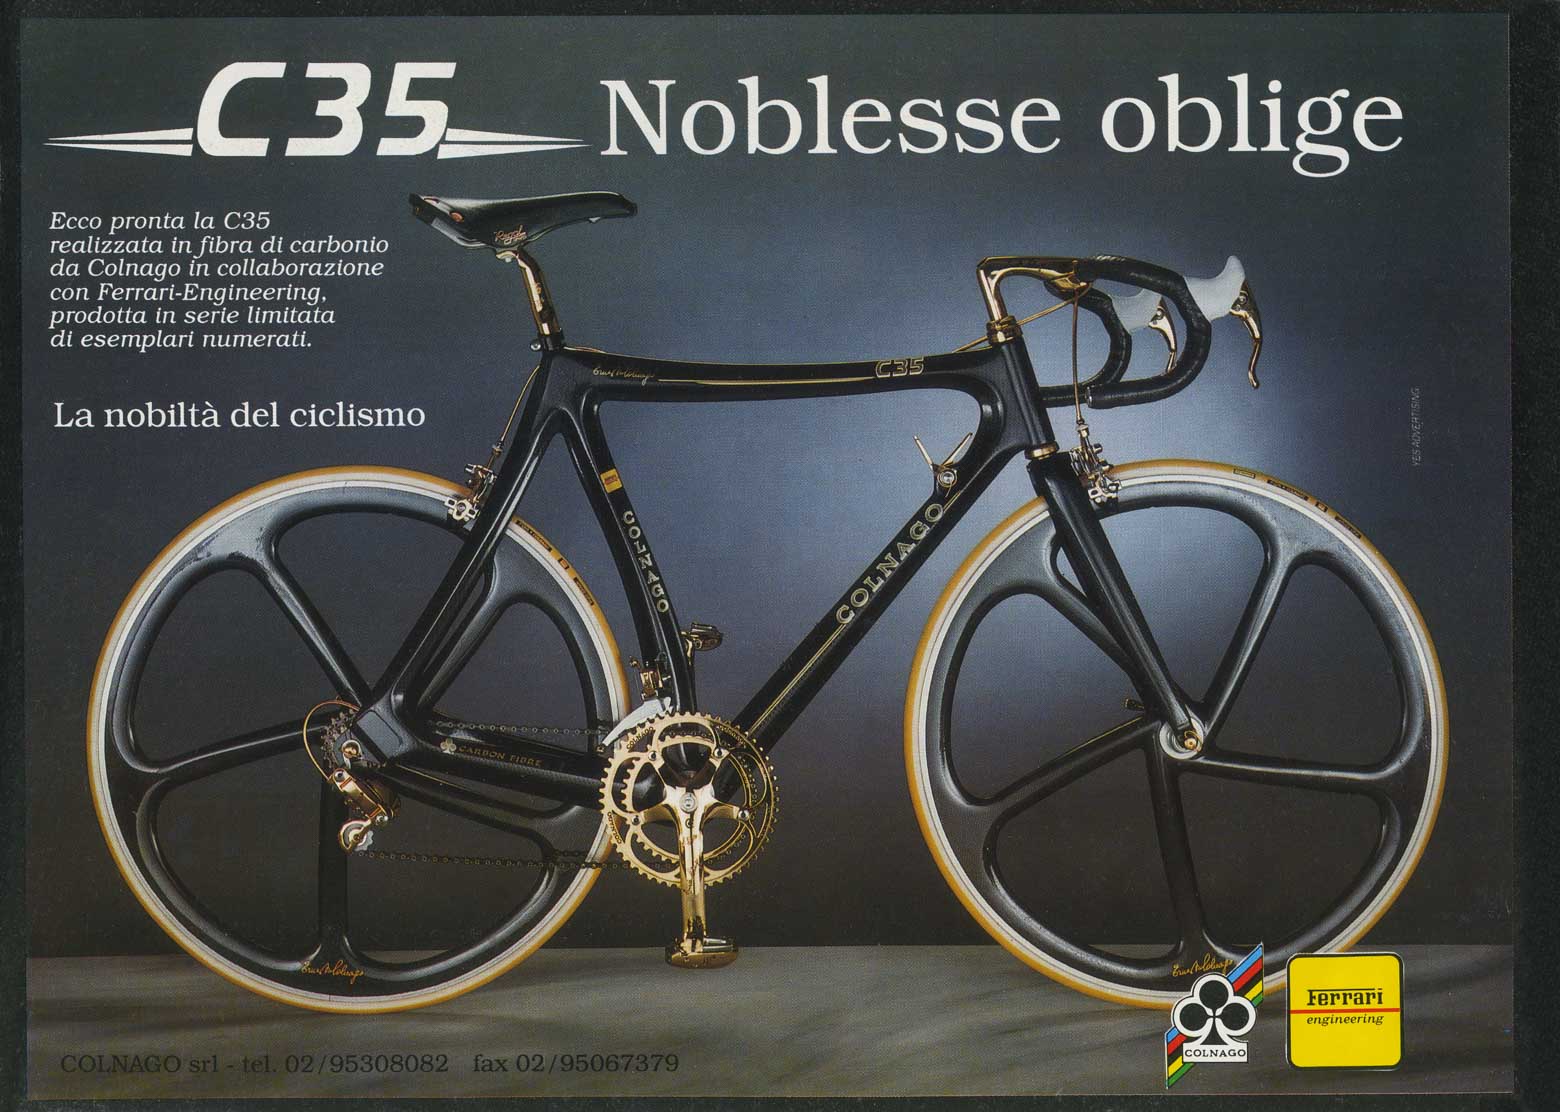 BiciSport 1990-04 Colnago advert main image